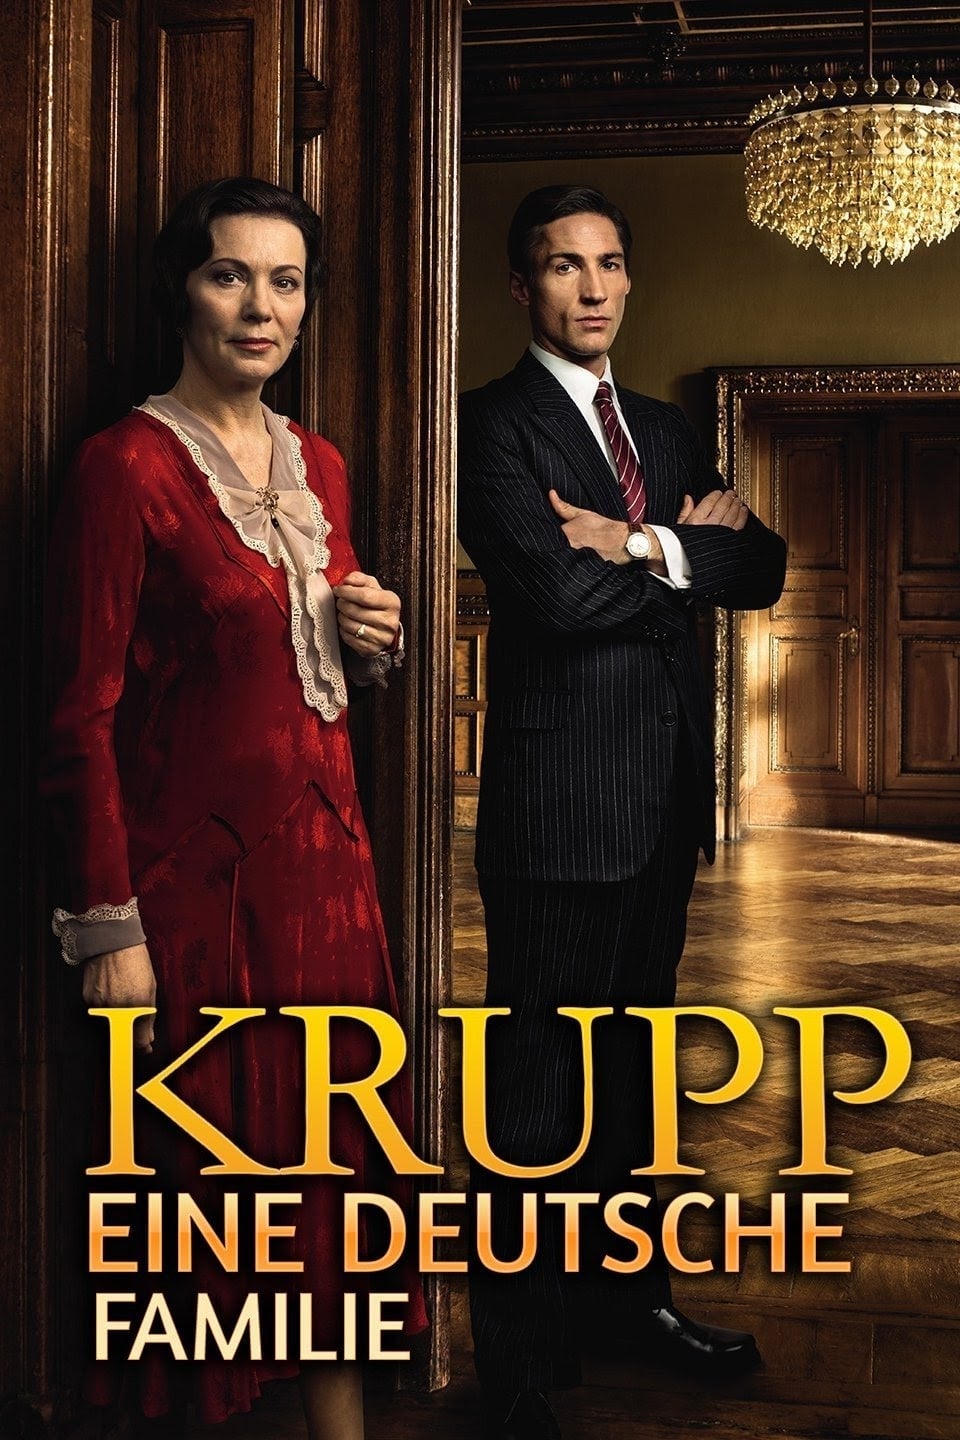 Krupp: A Family Between War and Peace